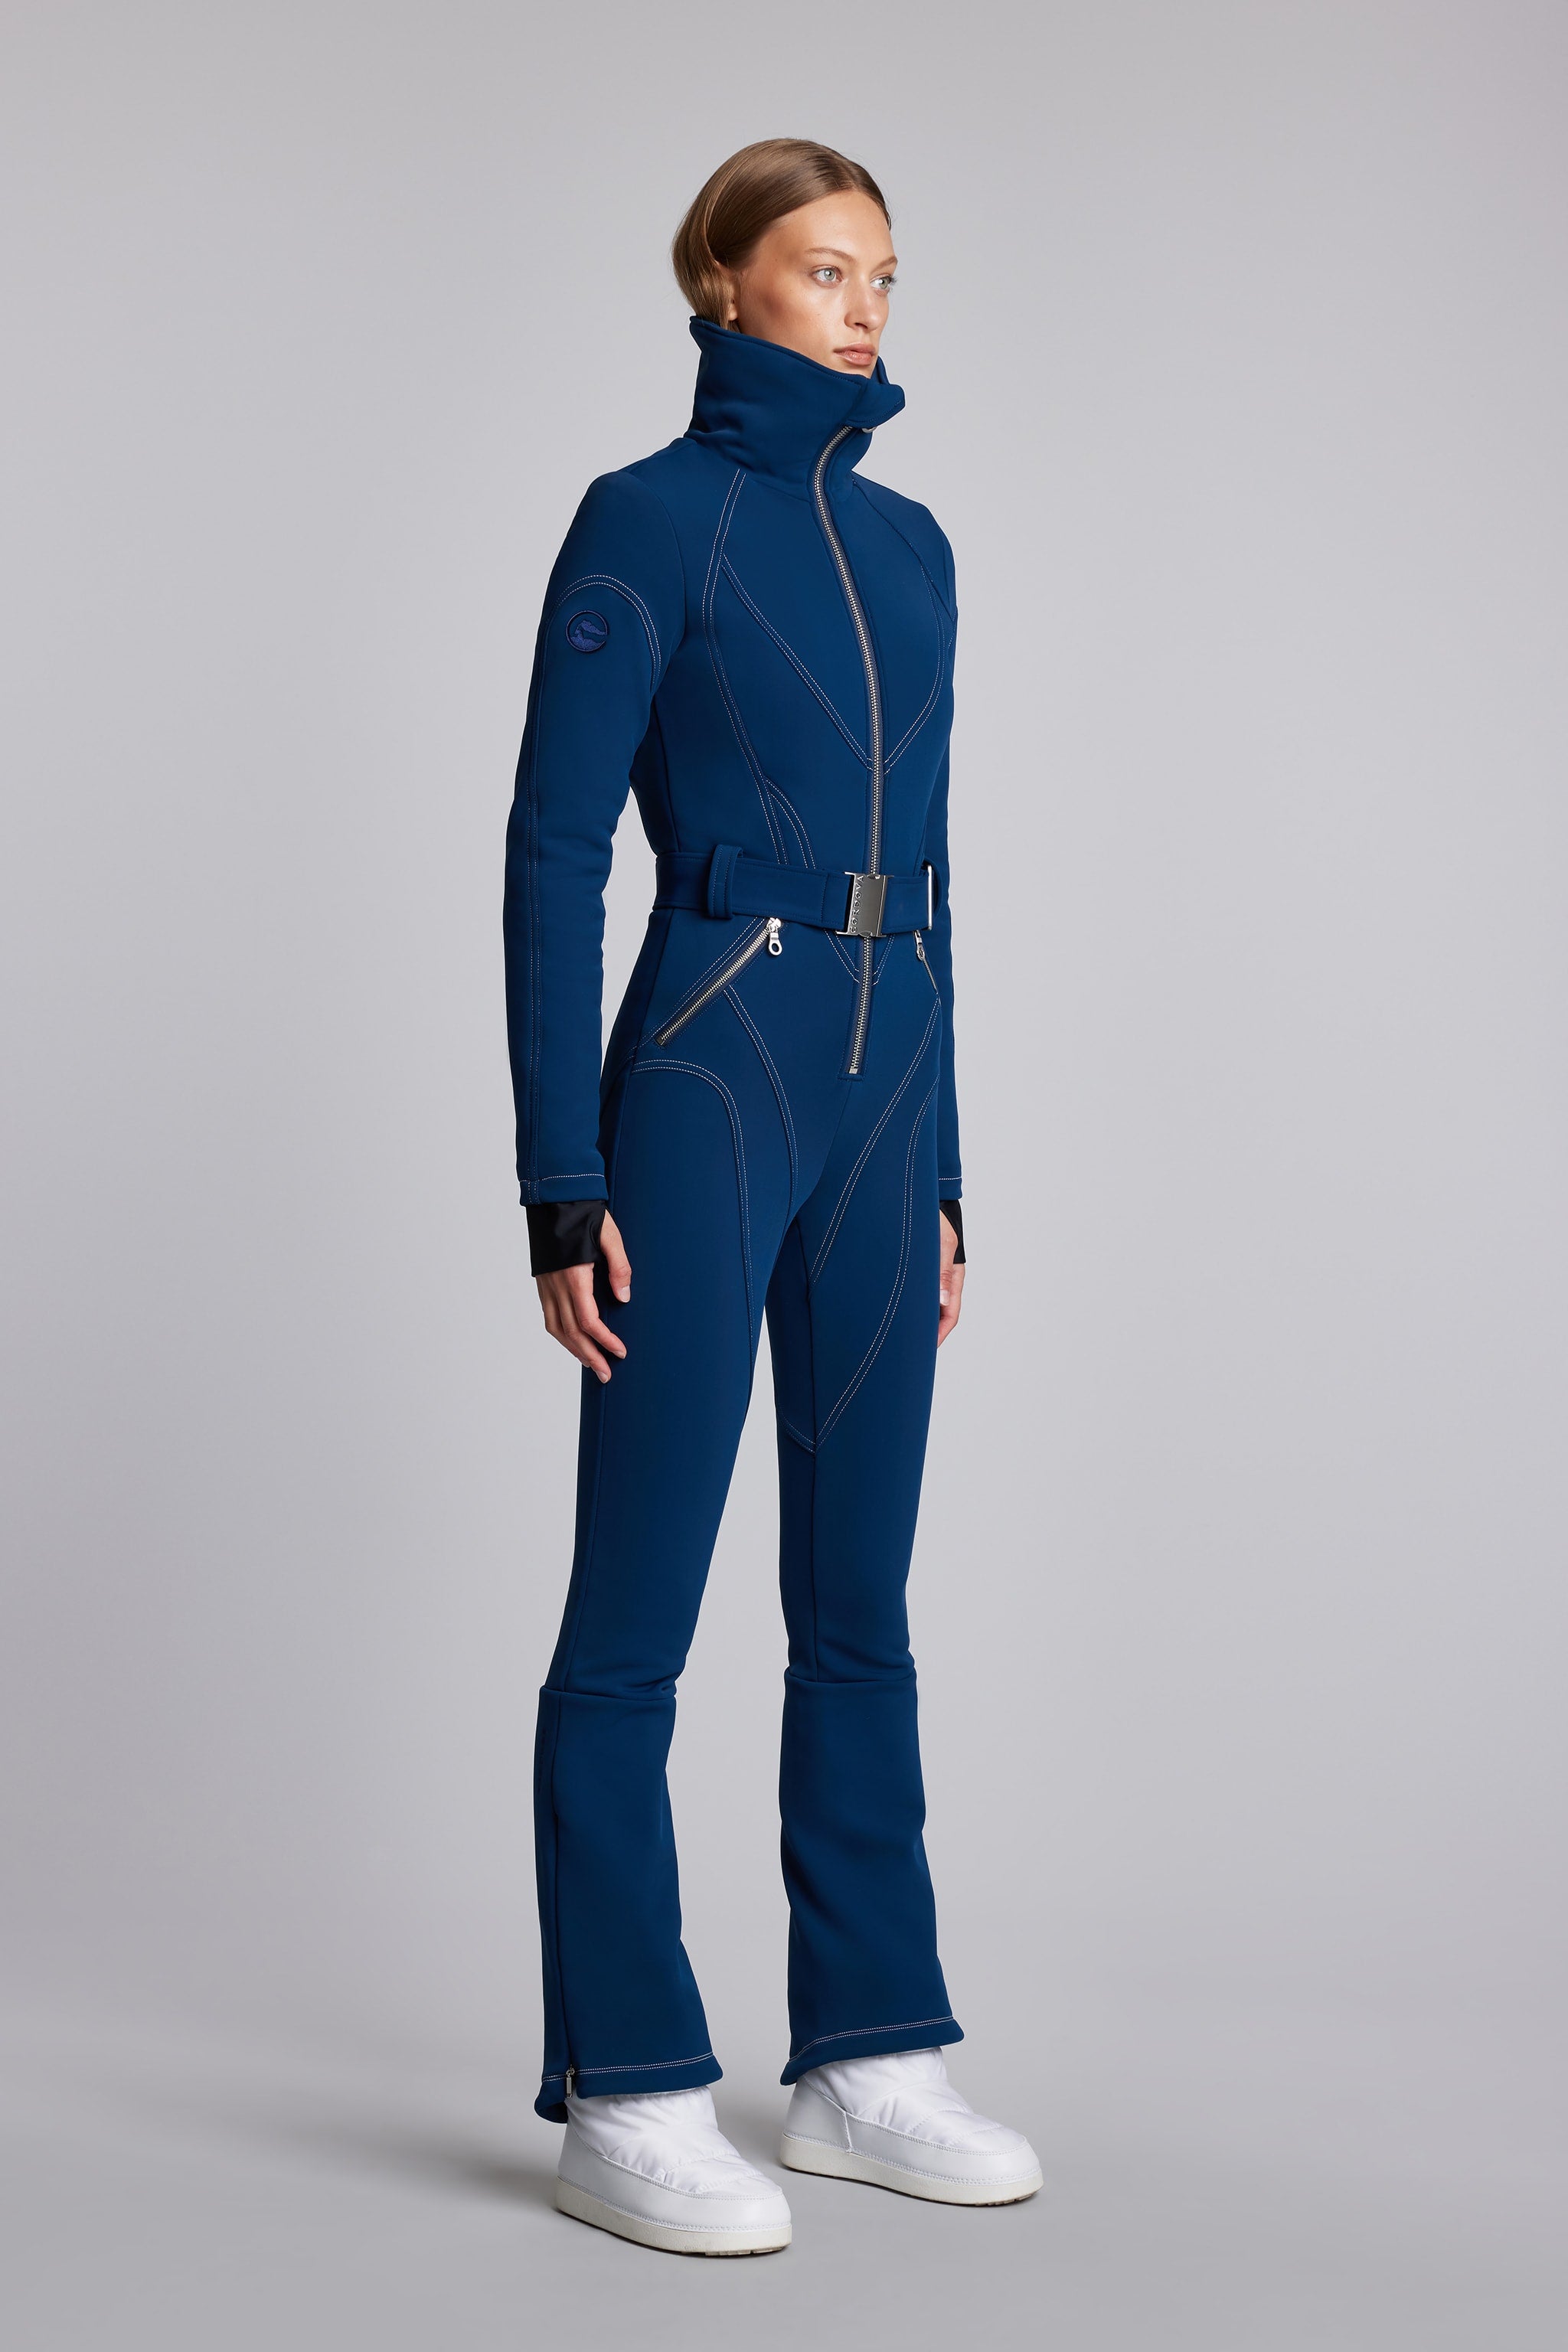 Cordova Women's Waterproof Stretch Ski Suit